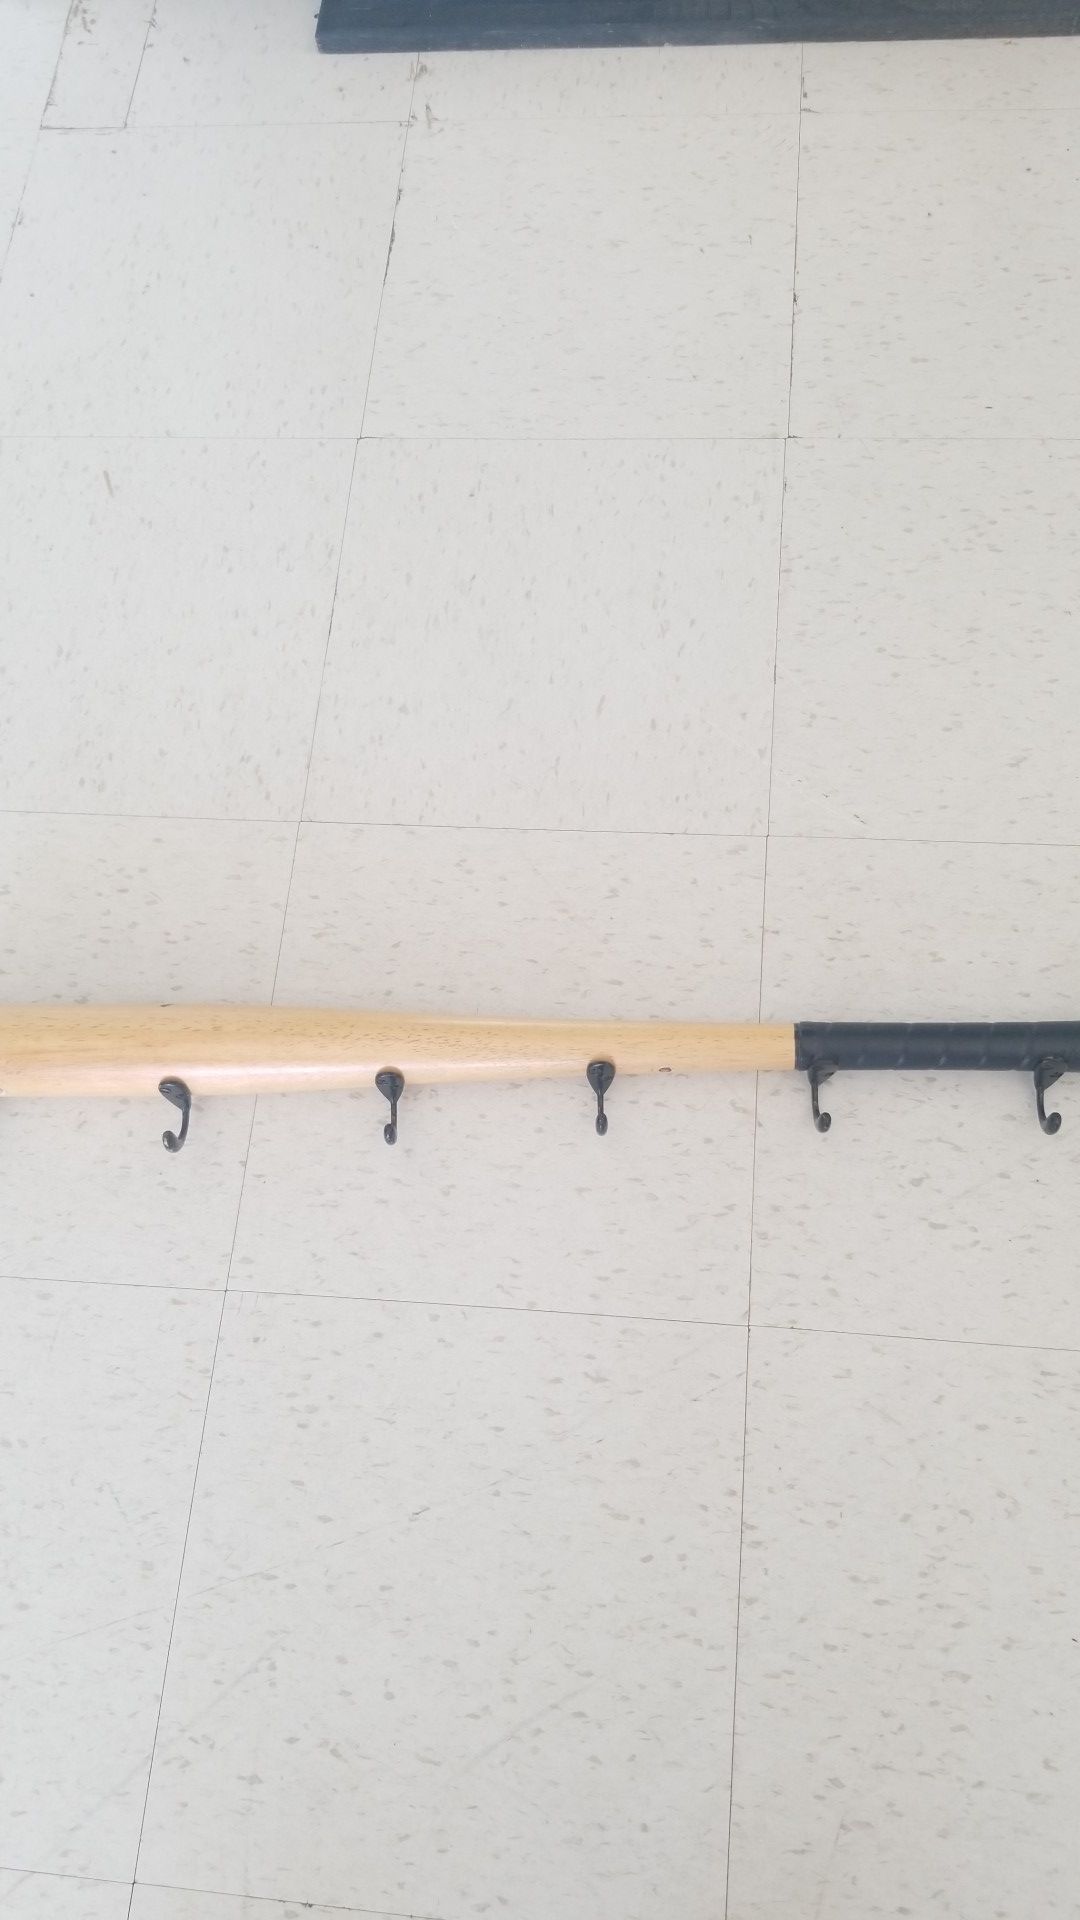 Baseball bat with hangers